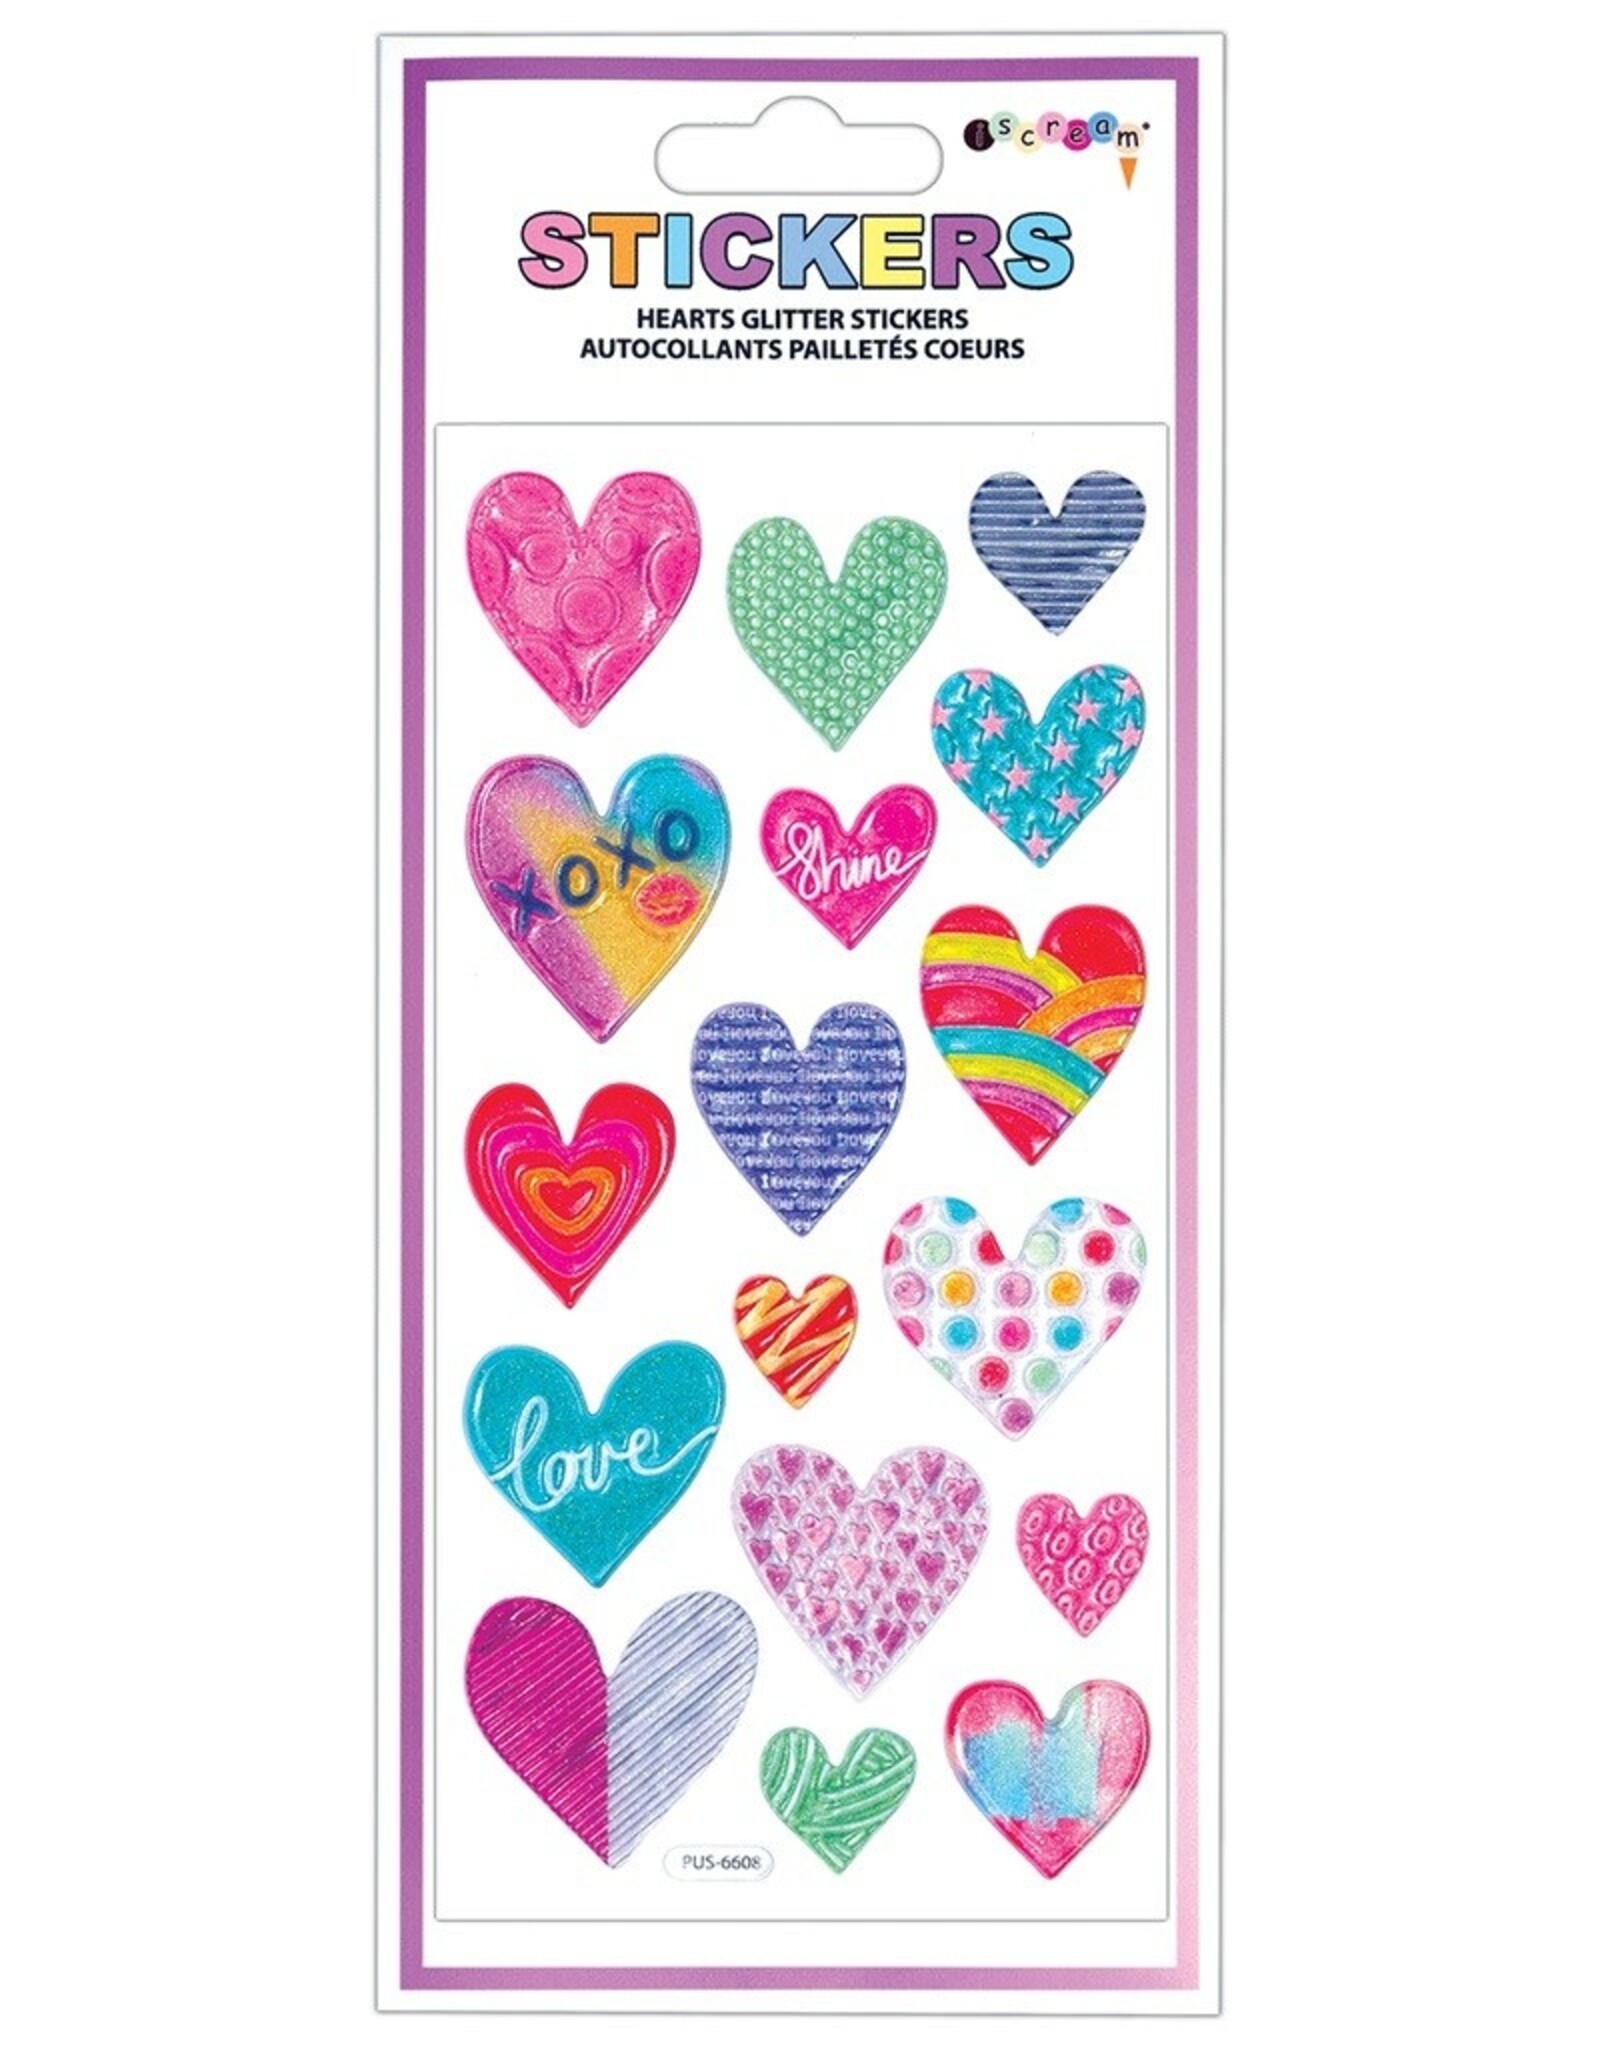 Hearts Glitter Stickers